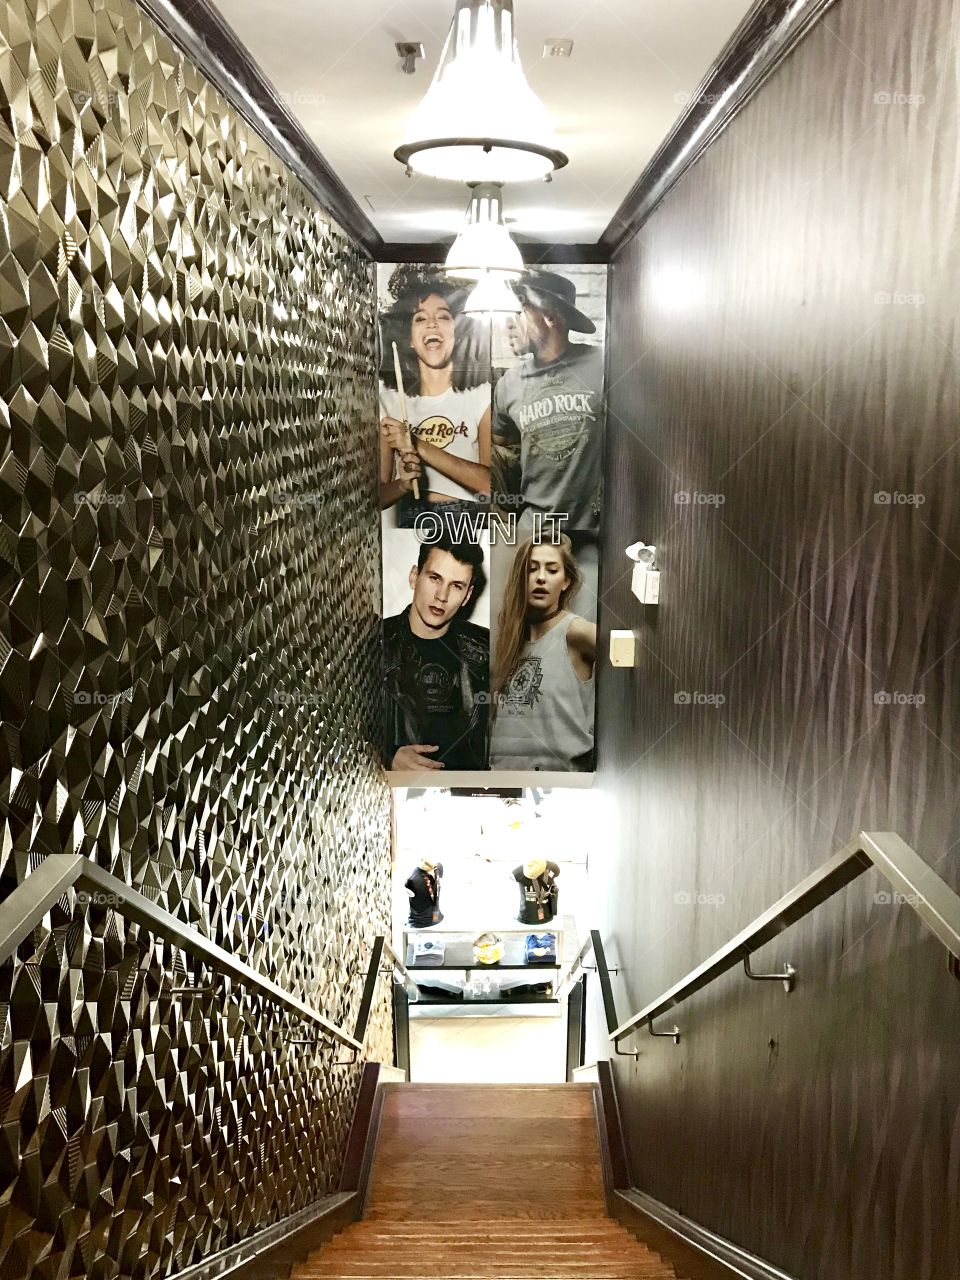 Stairwell to Hardrock Cafe apparel (Niagara Falls Ontario Canada)